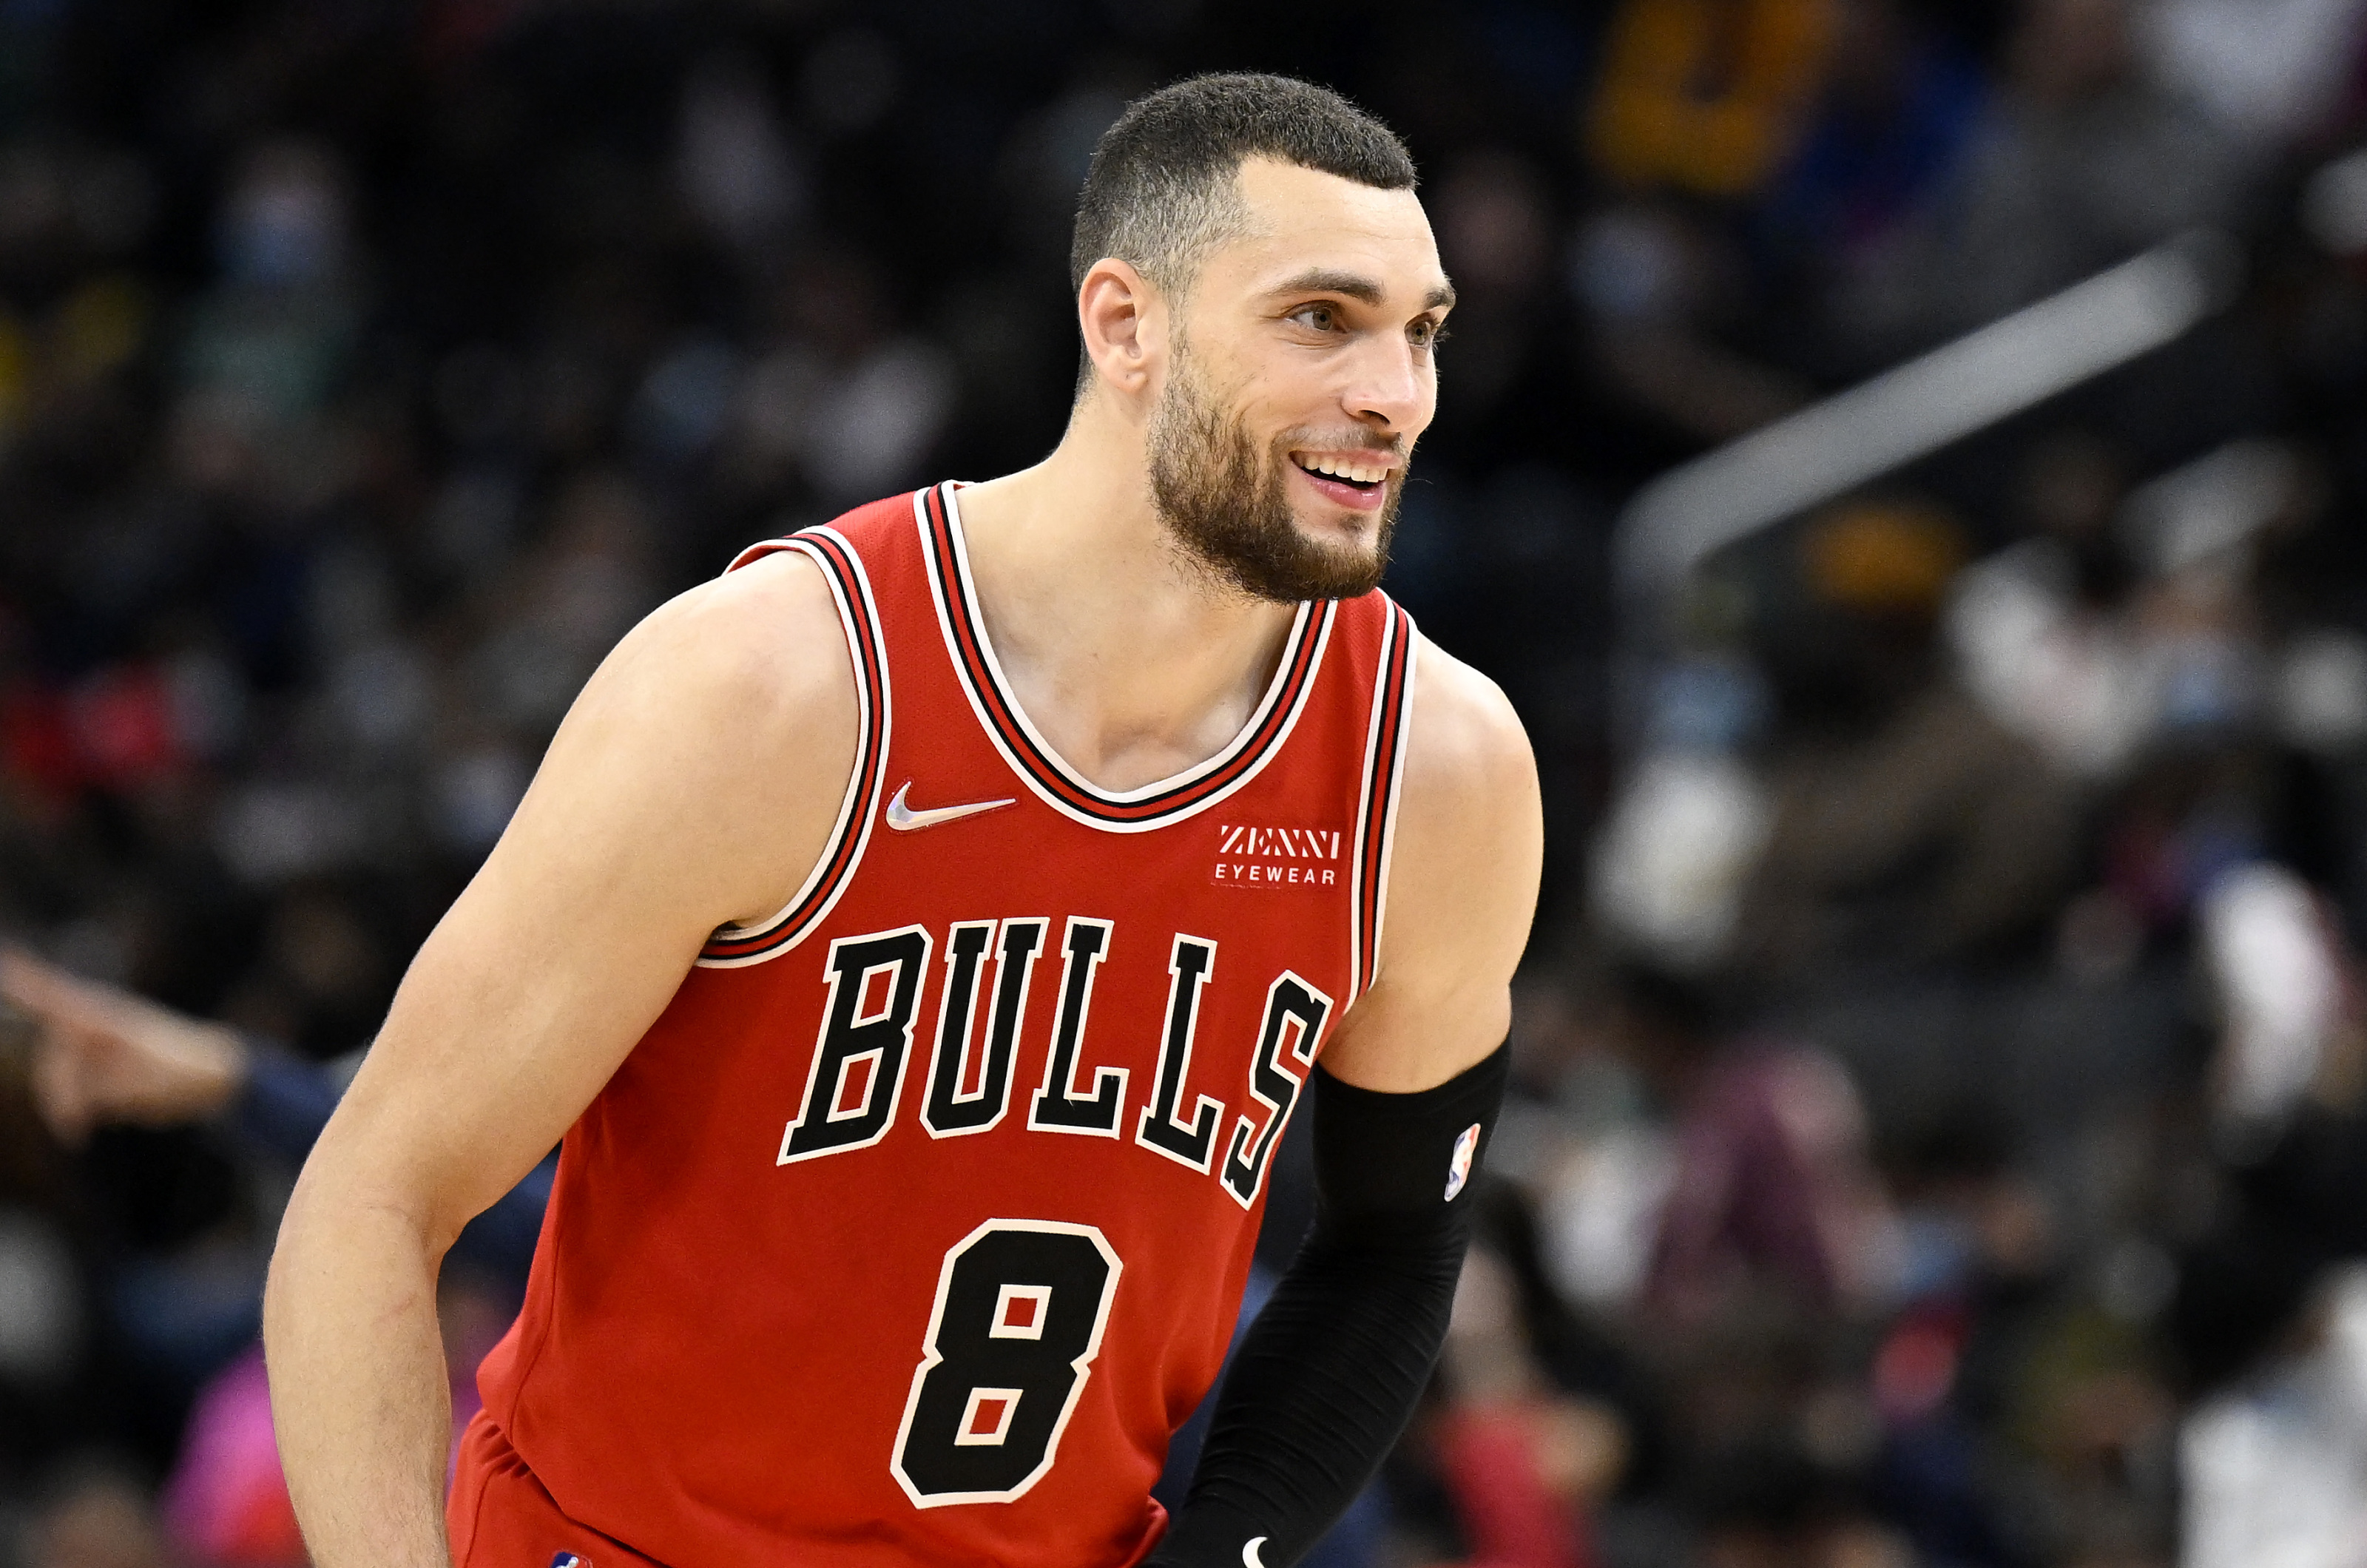 Chicago Bulls predicted to trade Zach LaVine in next three seasons